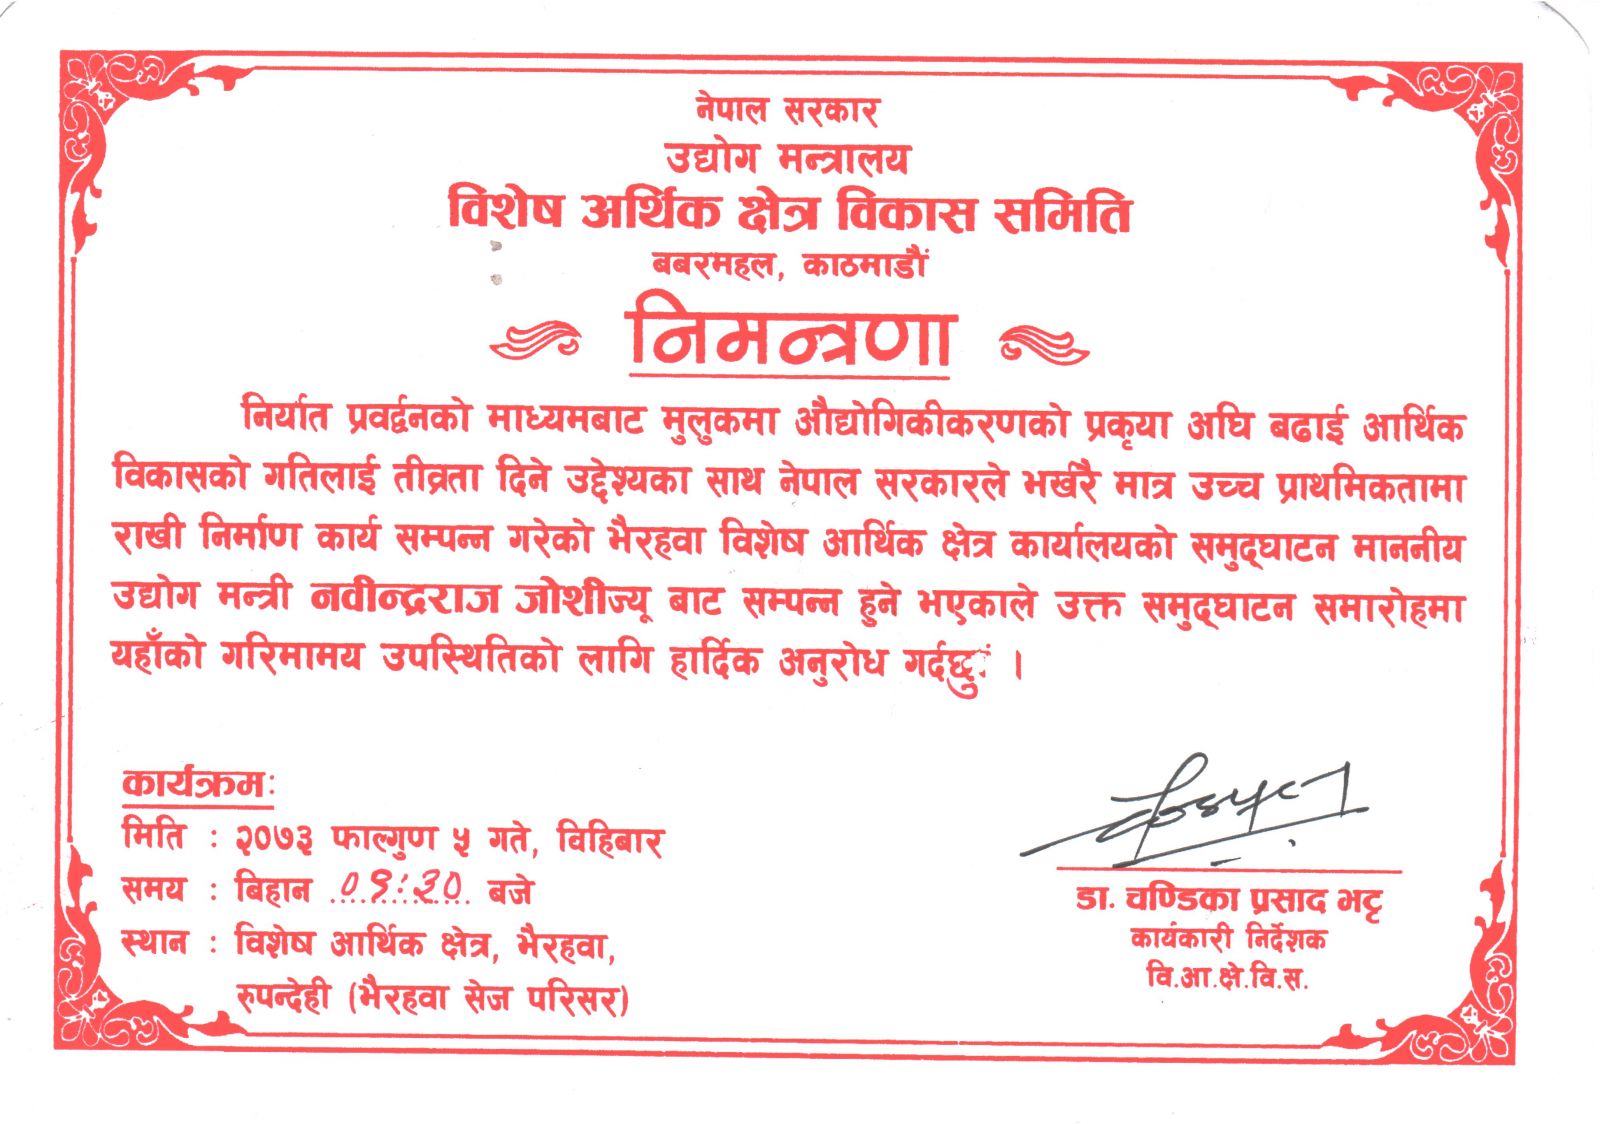 SEZ Bhairahawa Inauguration Invitation Card